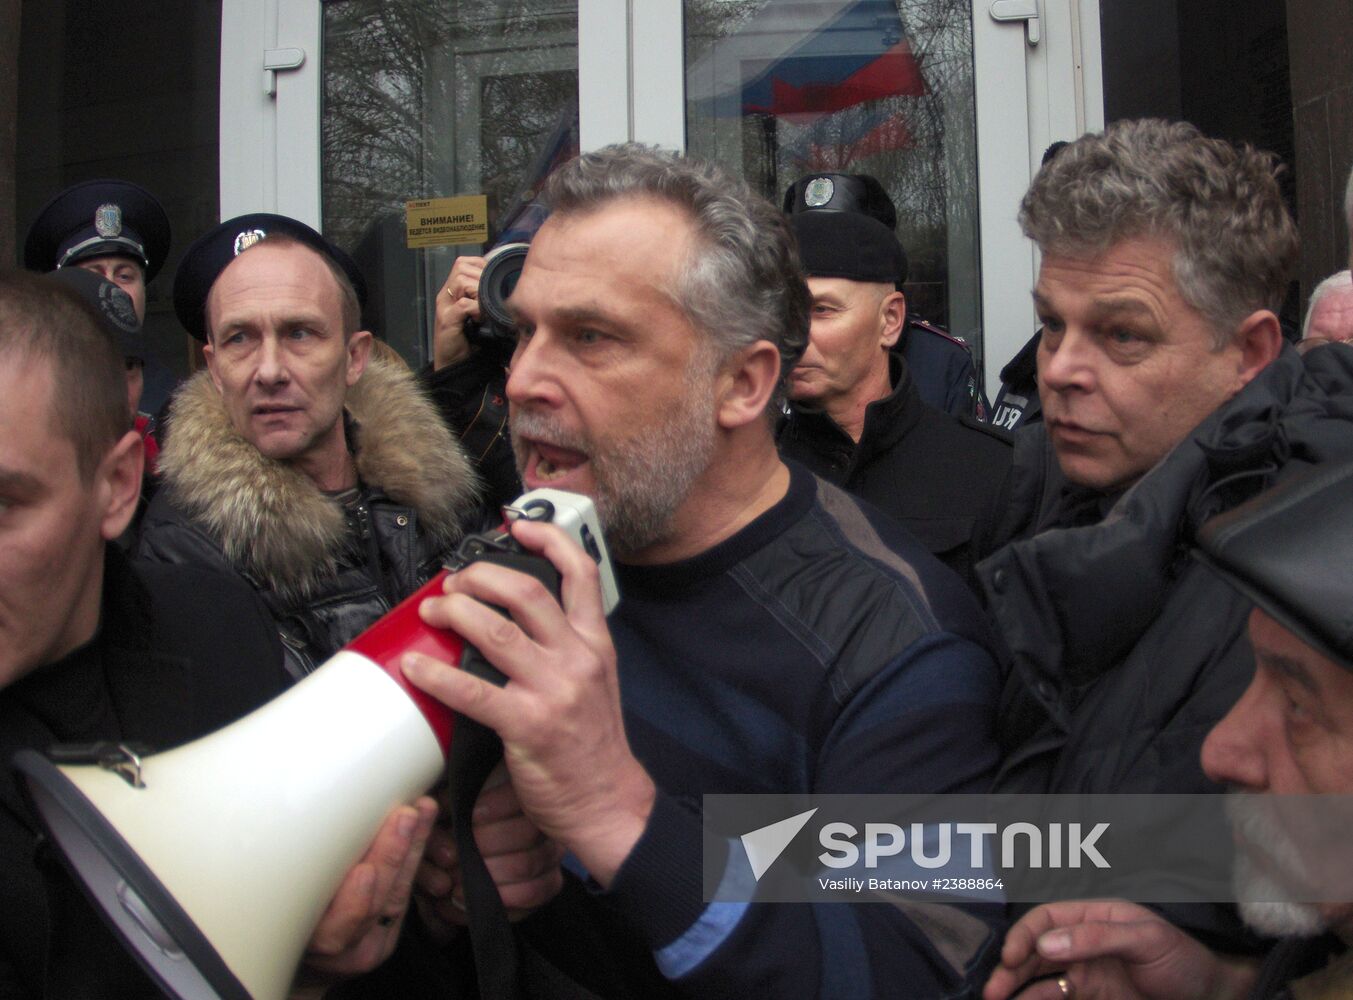 Rally outside Sevastopol city administration